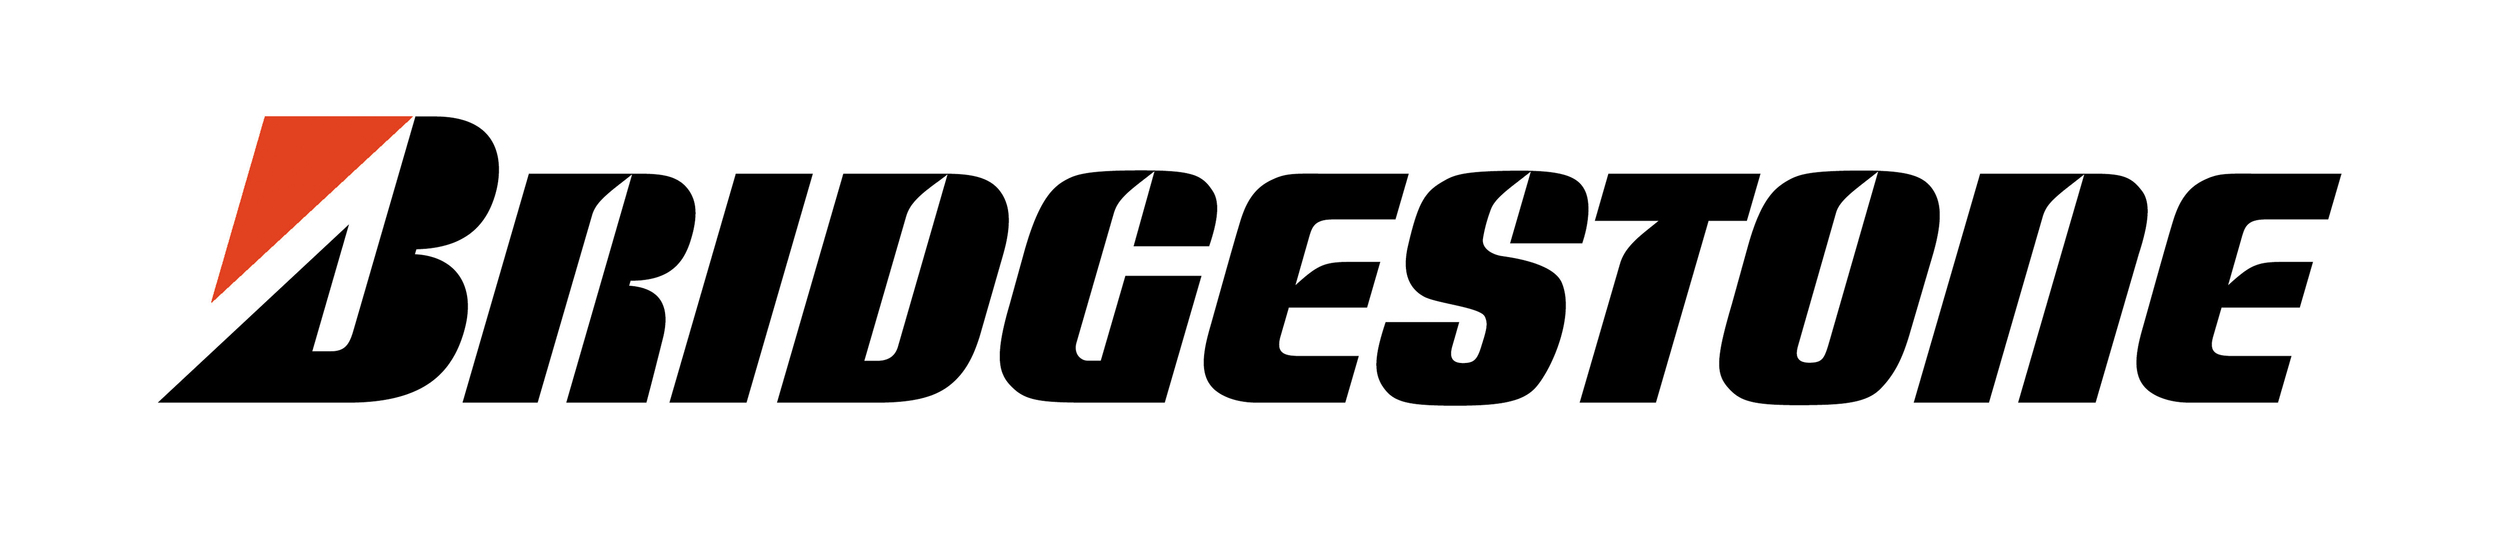 logo-bridgestone.jpg